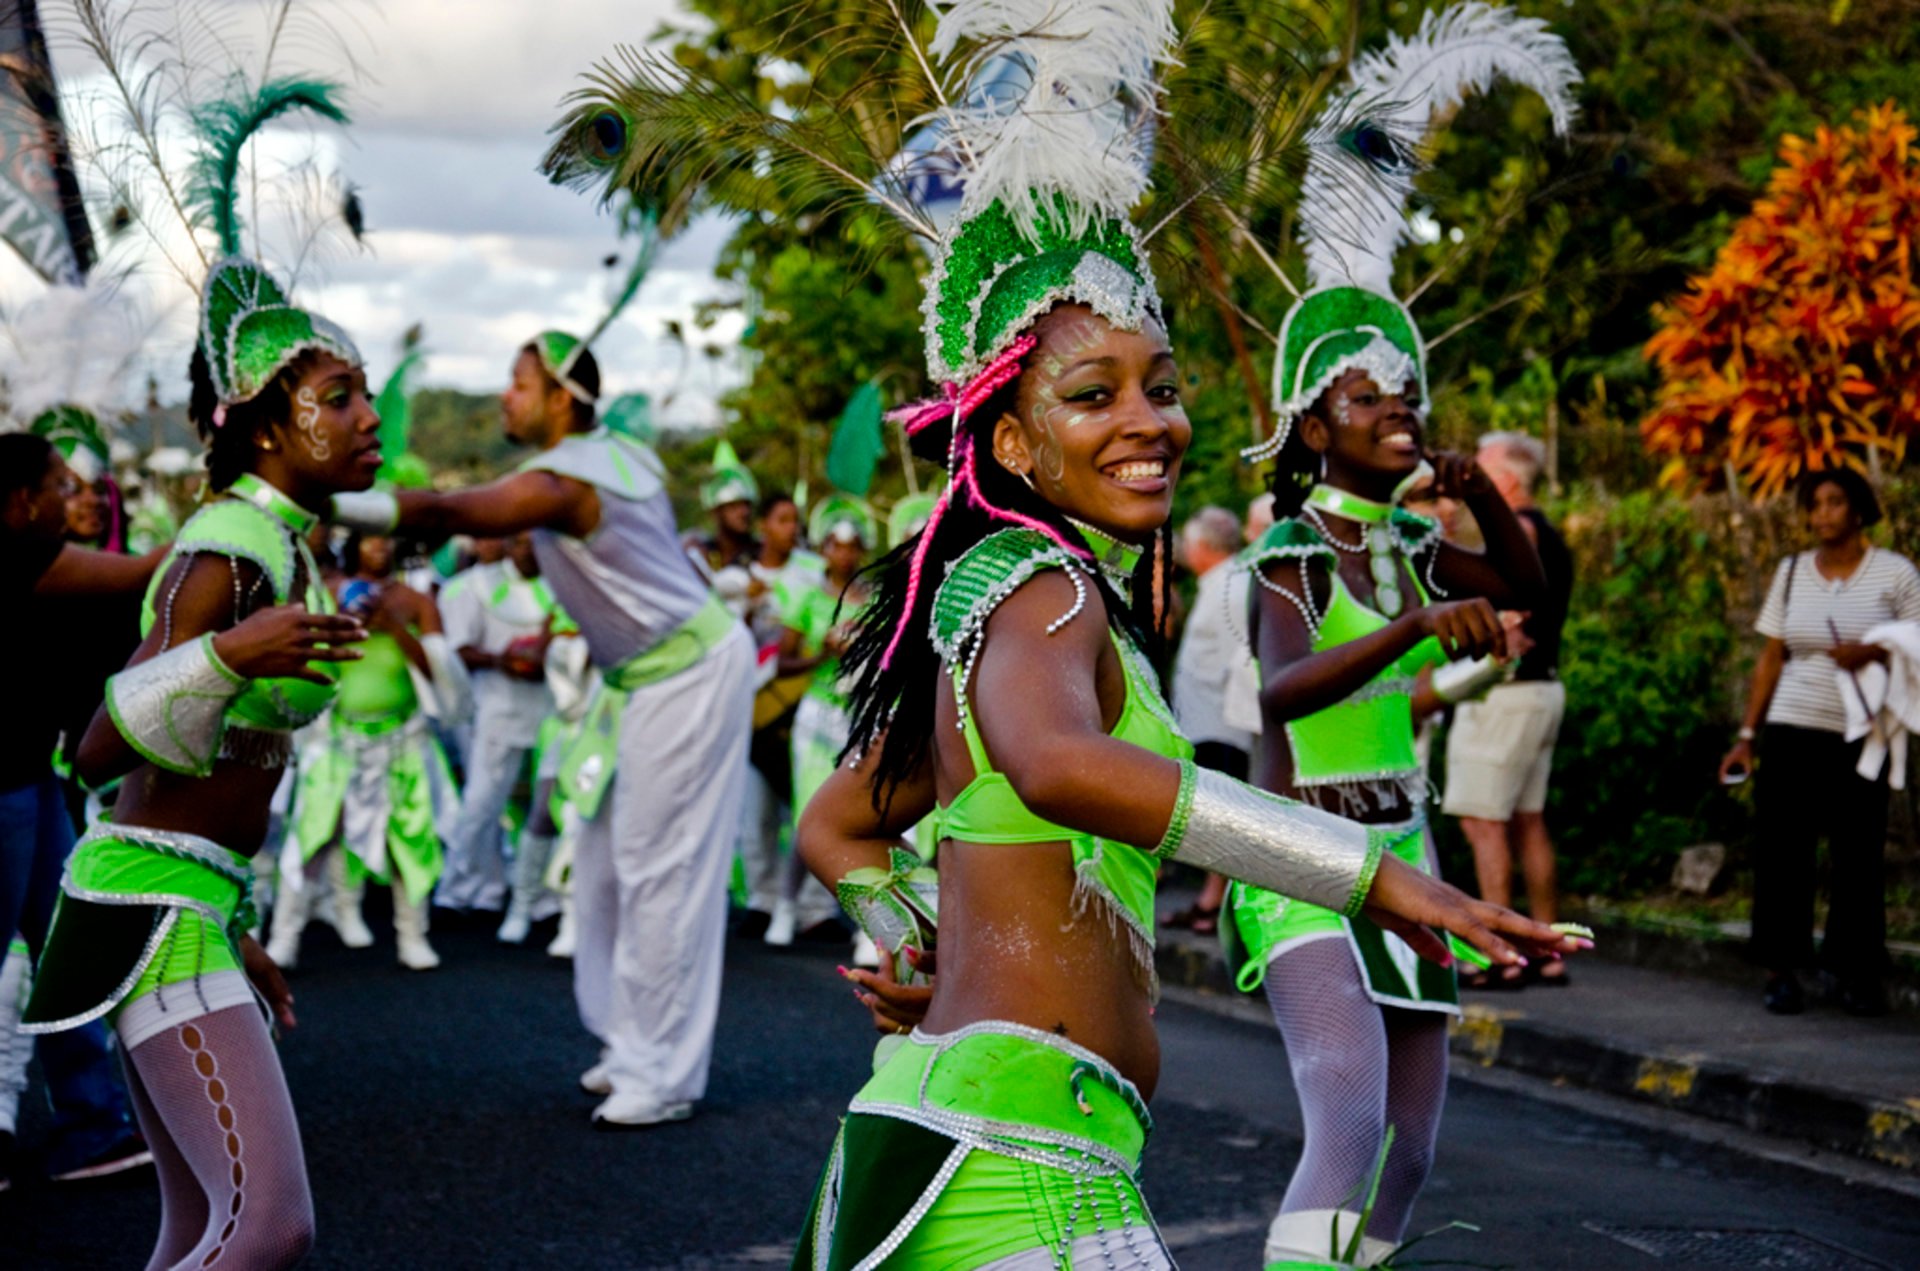 Montego Bay Carnival 2023 Tickets, Sun, Dec 17, 2023 At, 49% OFF